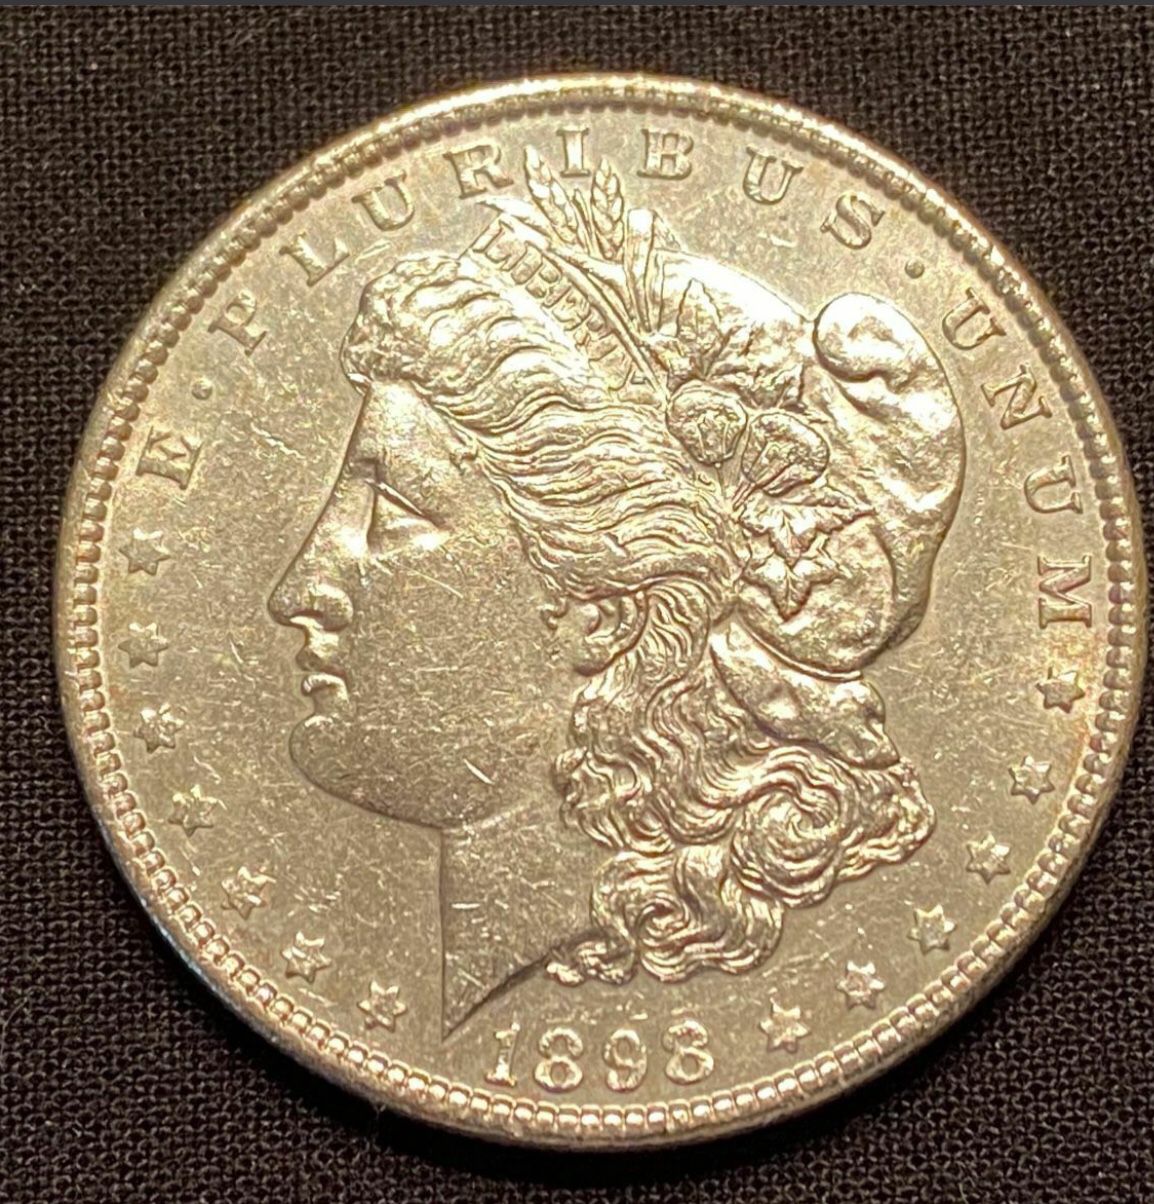 1898 90% Silver Morgan Dollar (#365)